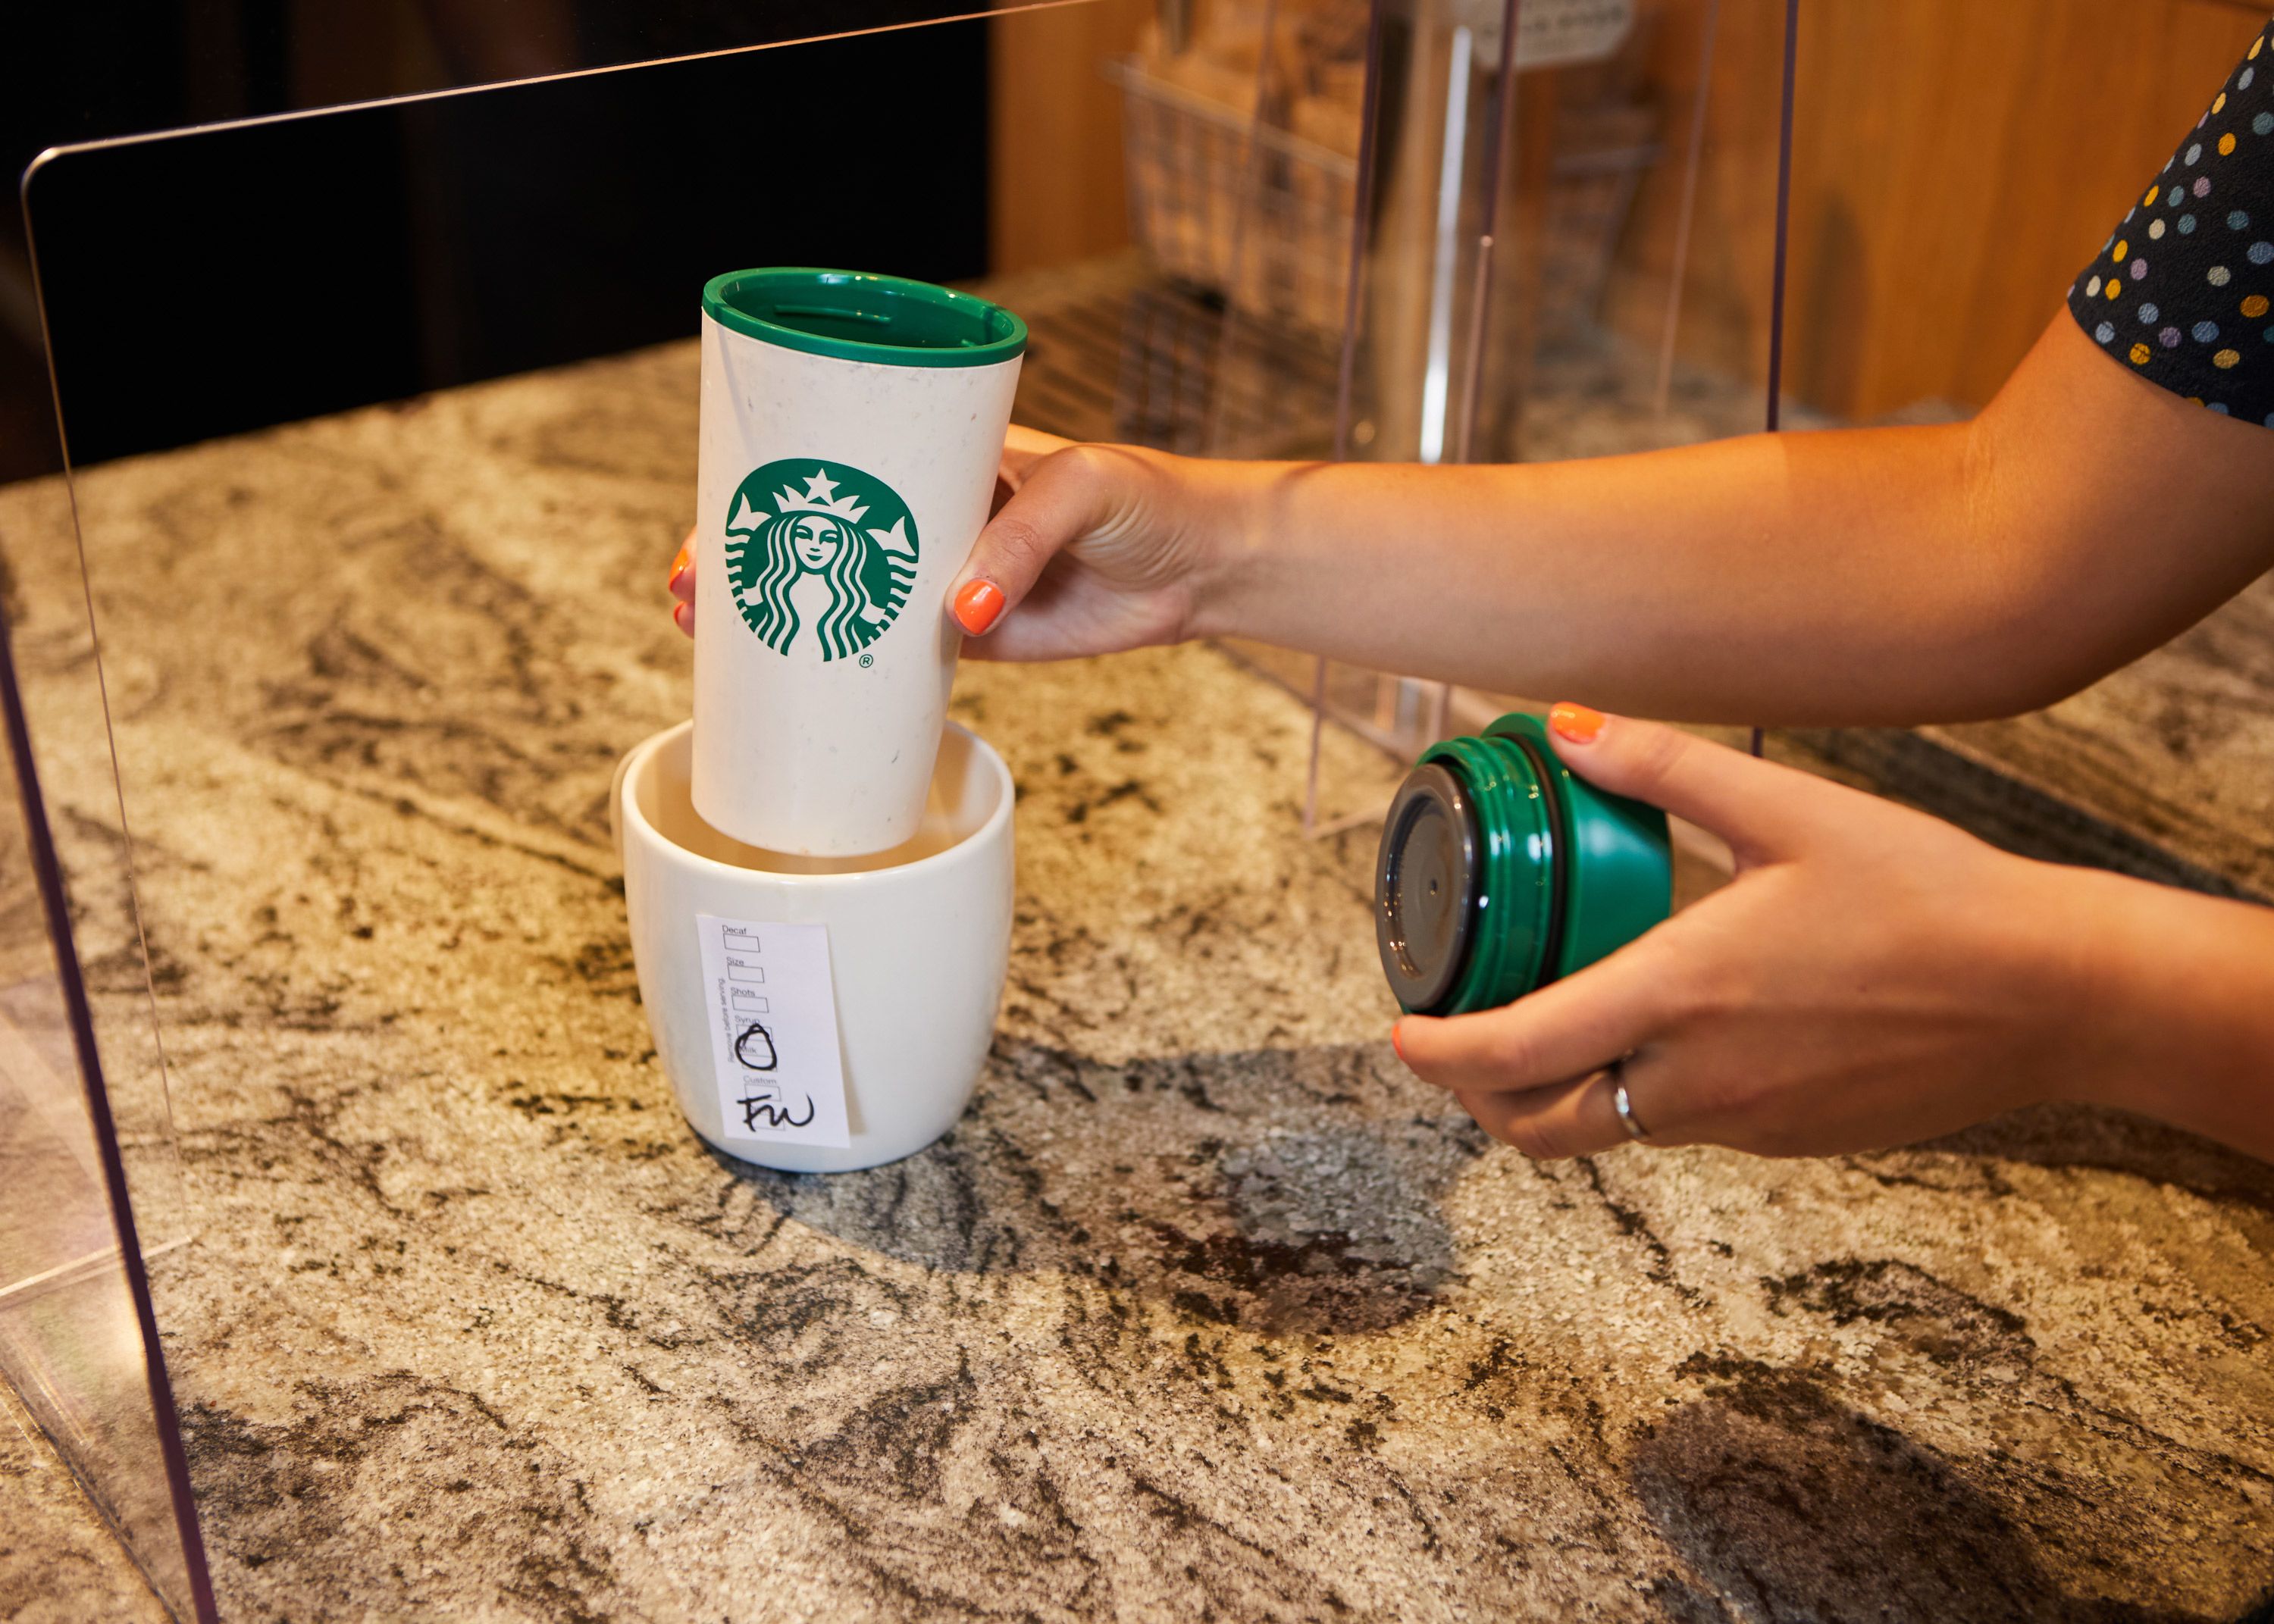 Starbucks is letting people bring in their own mugs again